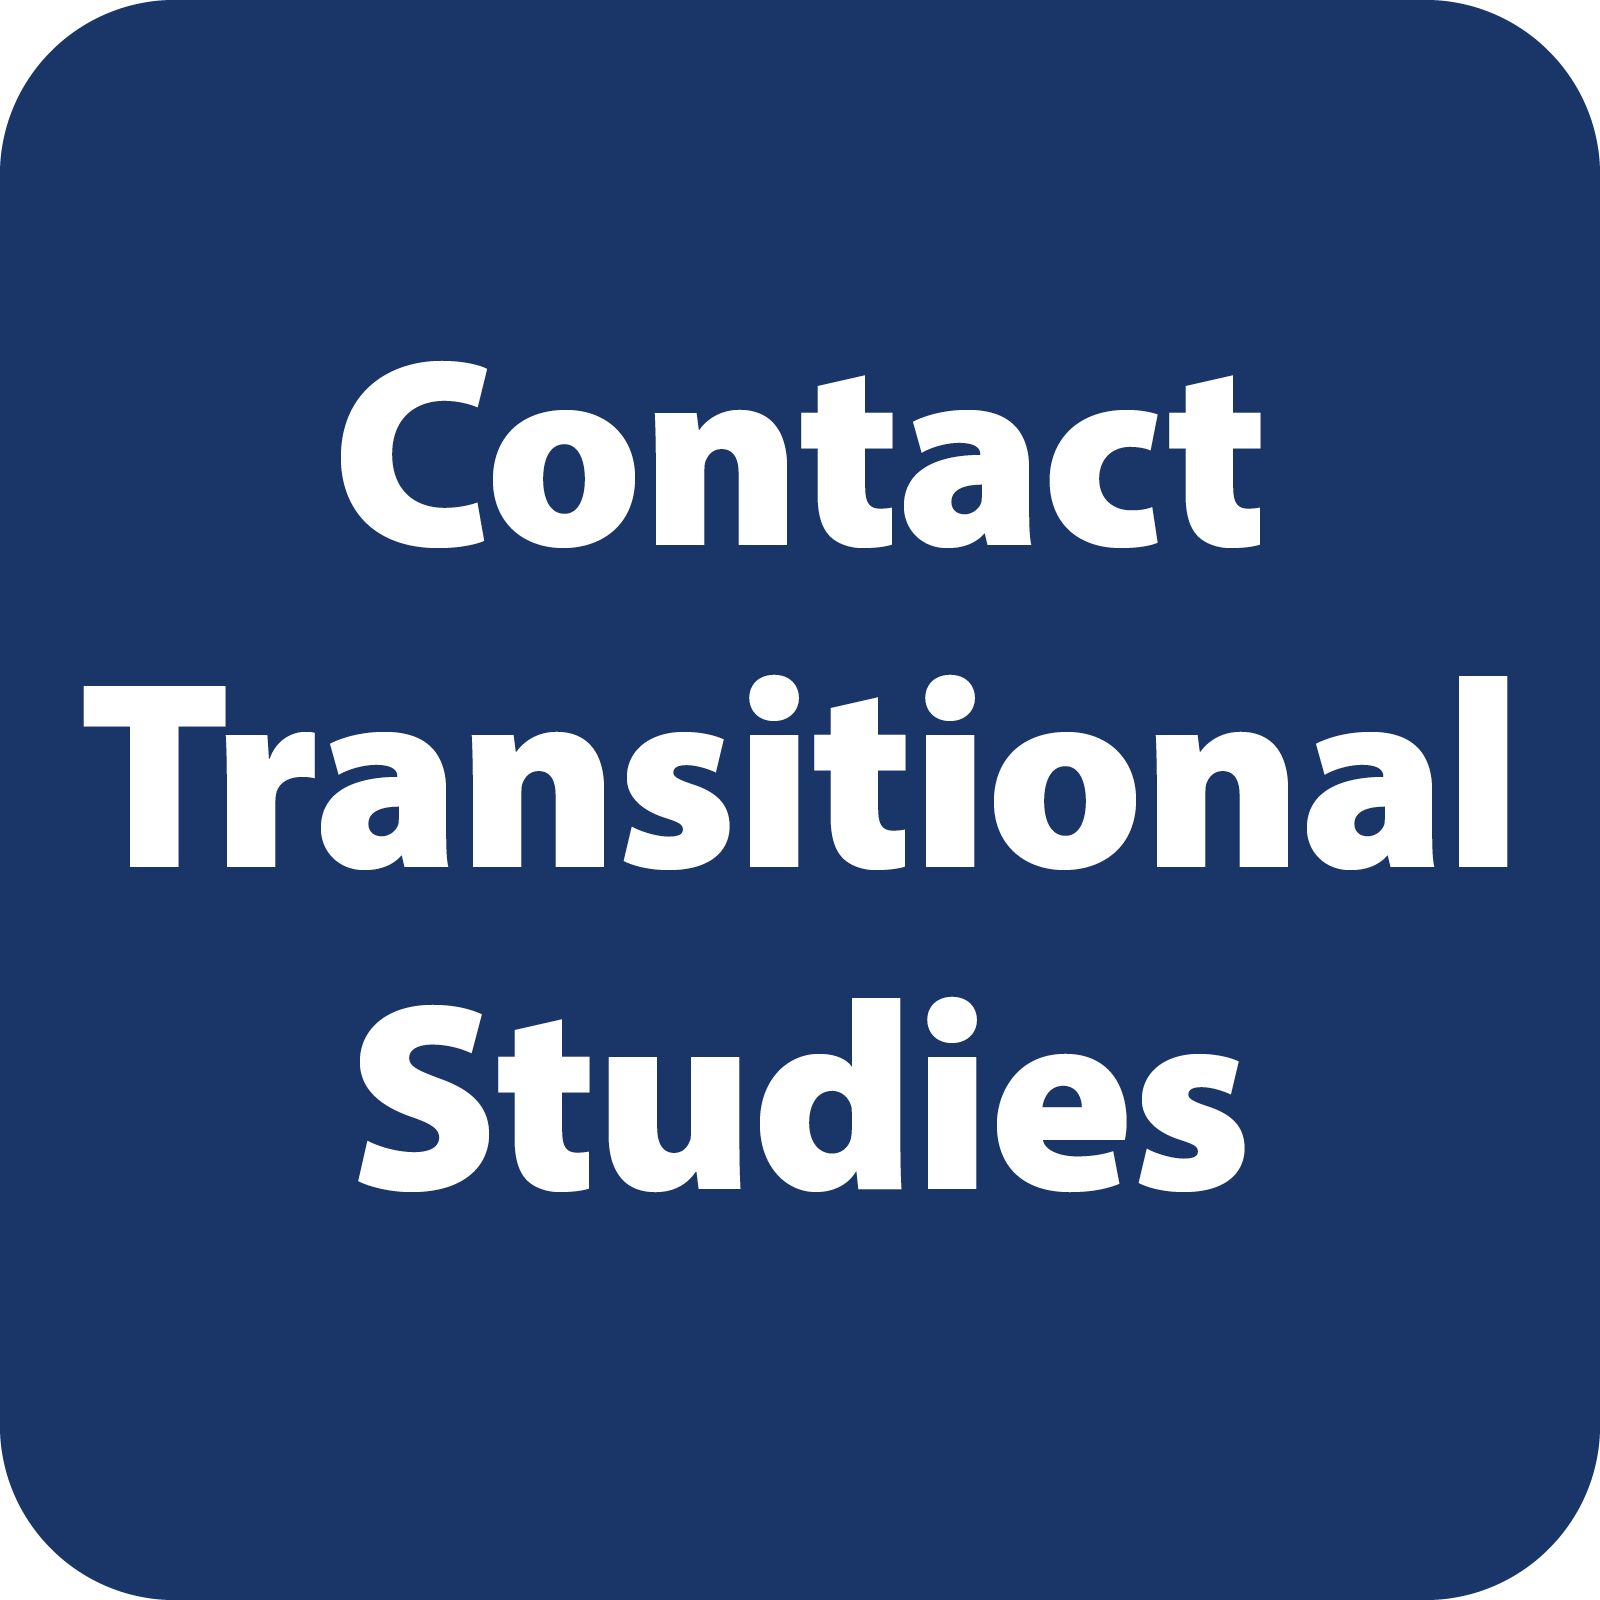 Contact Transitional Studies